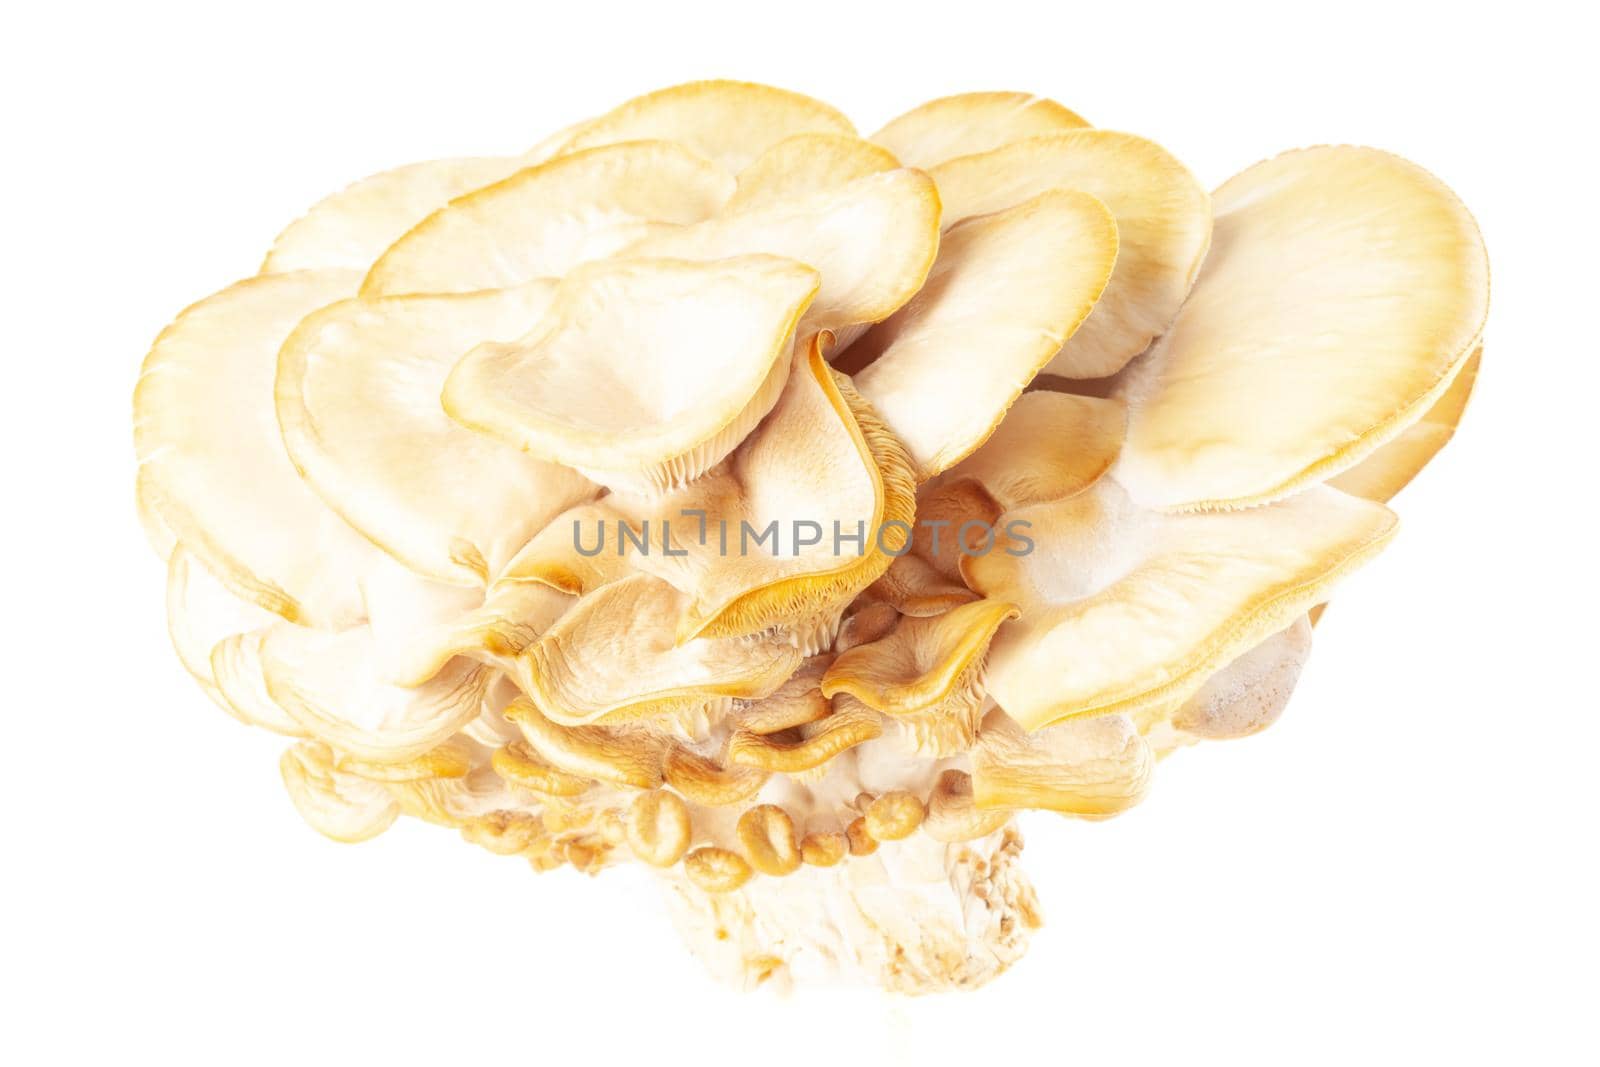 oyster mushroom close up isolated on white background.